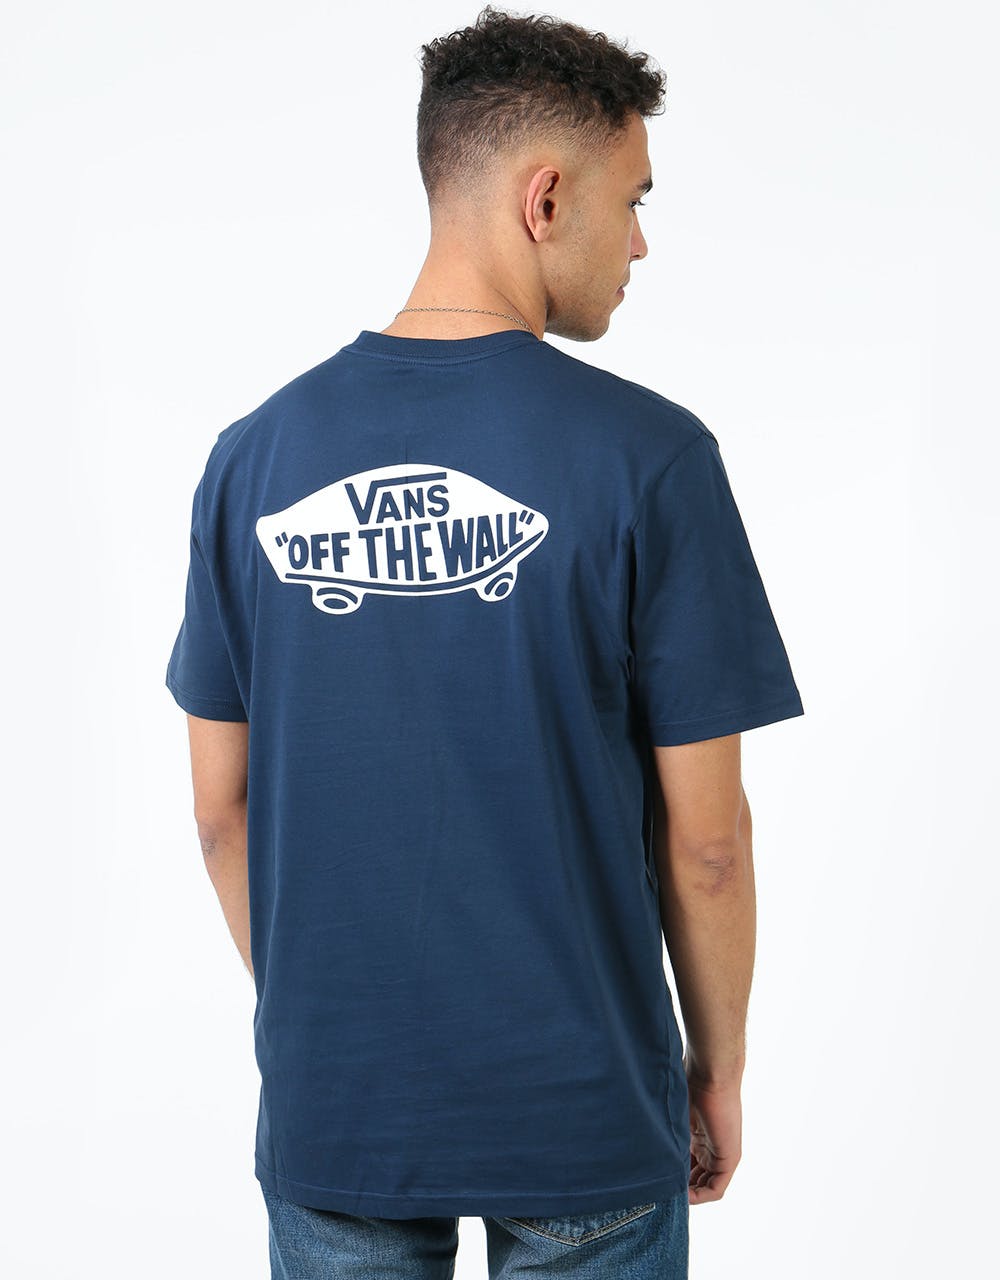 Vans OTW Classic T-Shirt - Dress Blues/White